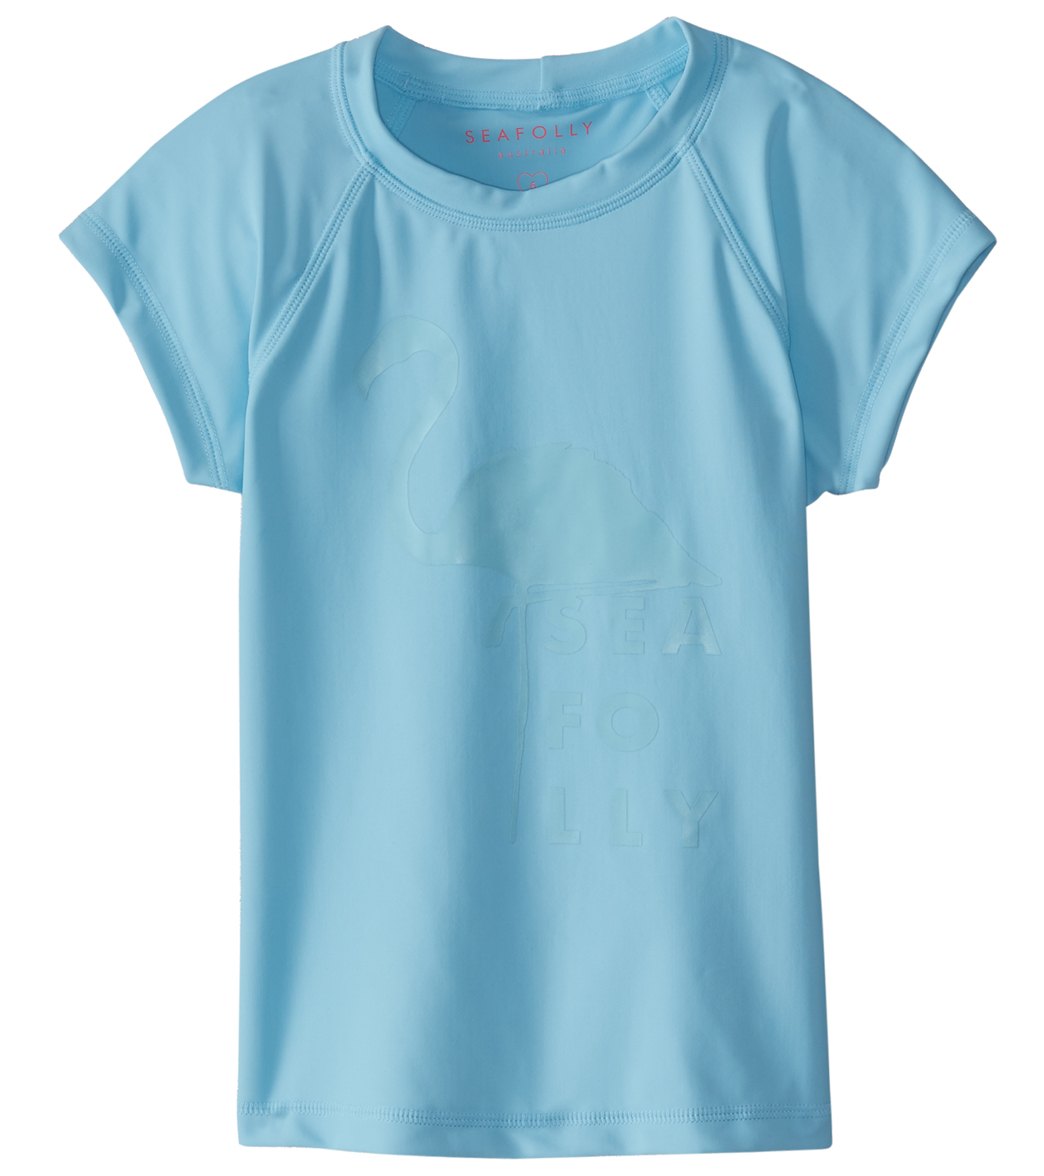 Seafolly Girls' Summer Essentials Short Sleeve Shirt Rashguard Big Kid - Aqua Sky 6 - Swimoutlet.com